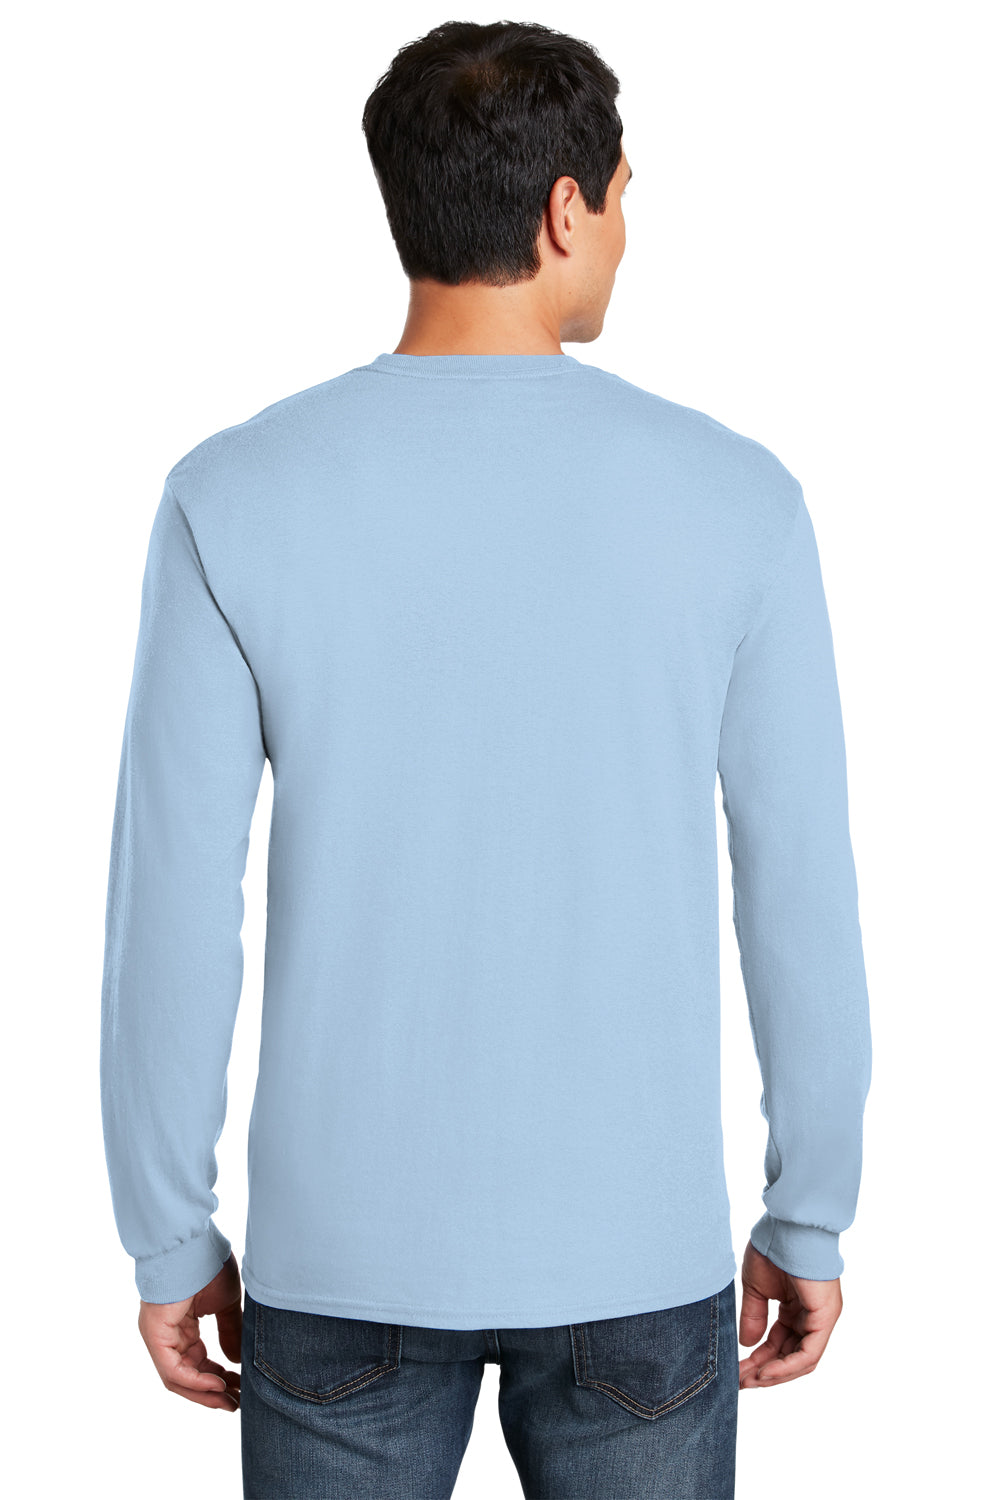 Gildan Mens Long Sleeve Crewneck T-Shirt Light Blue Back